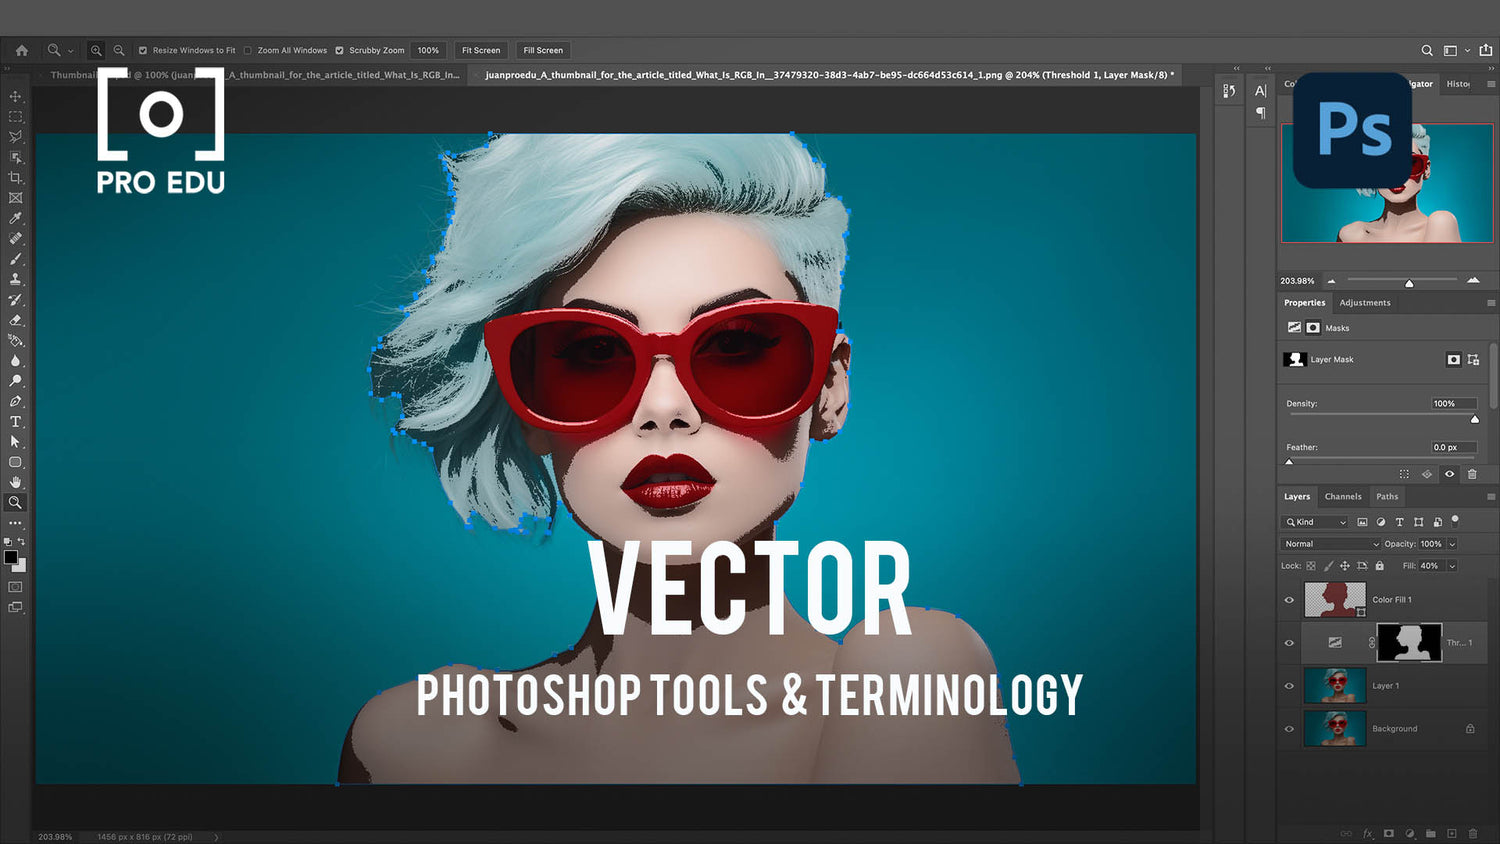 Vector Graphics Essentials in Photoshop - PRO EDU Guide